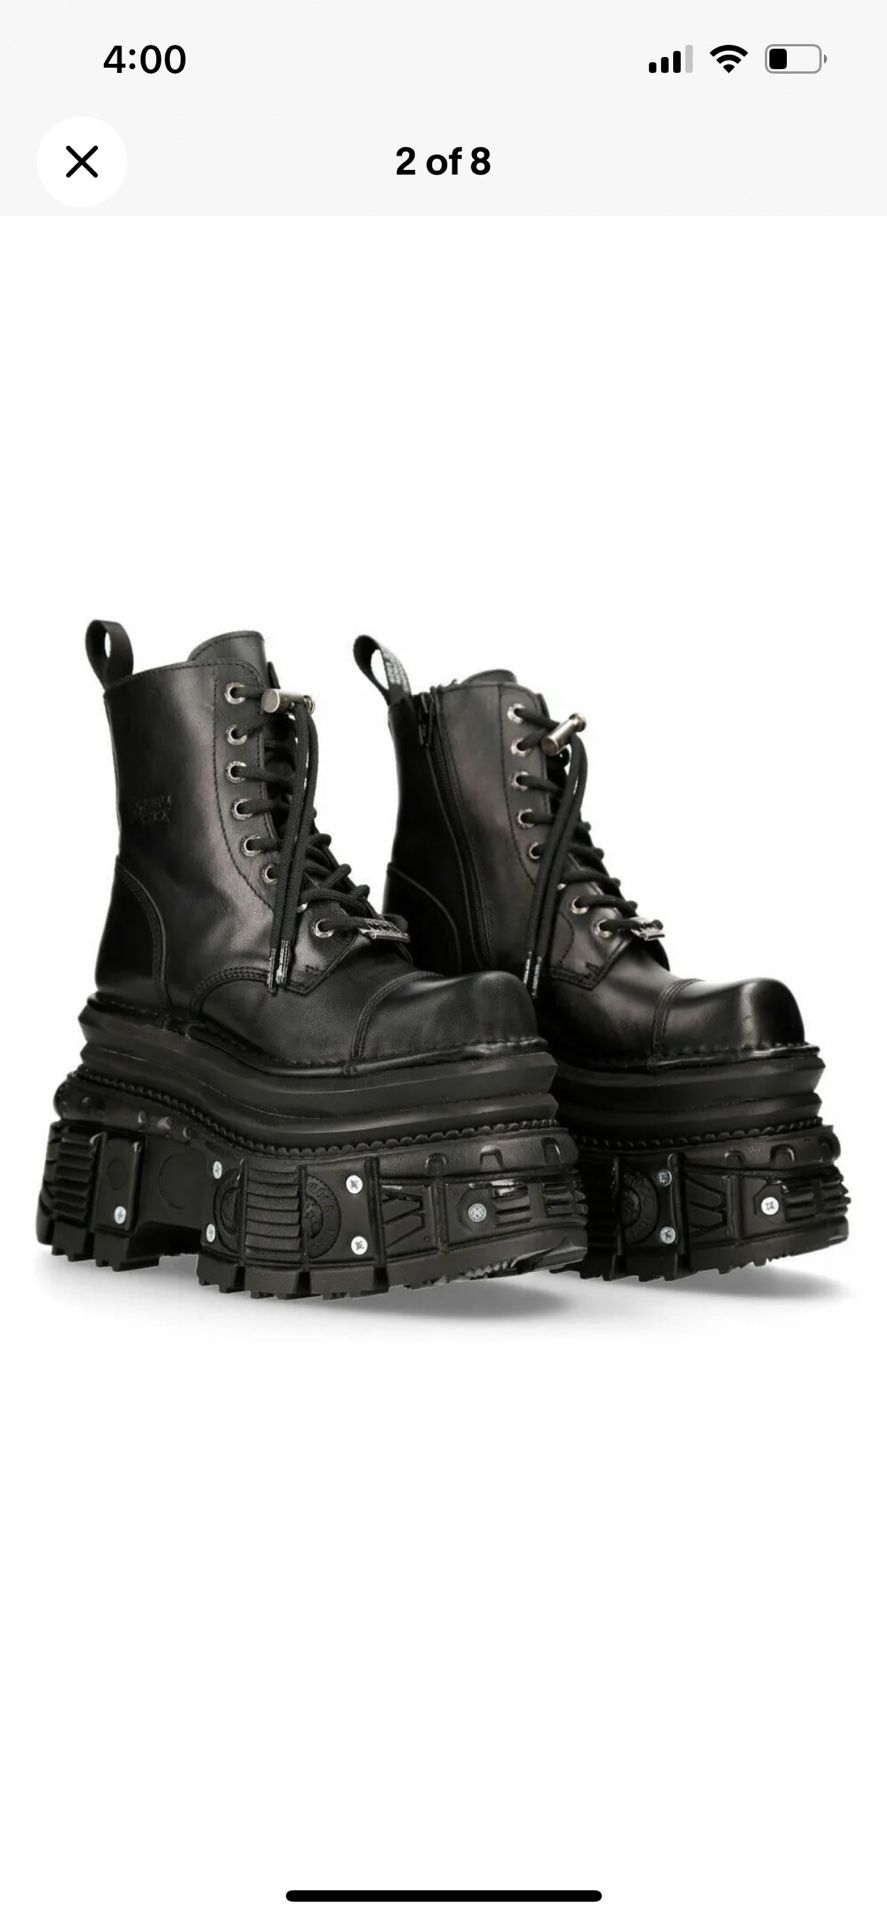 Unisex platform New rock Boots NEW Size 7